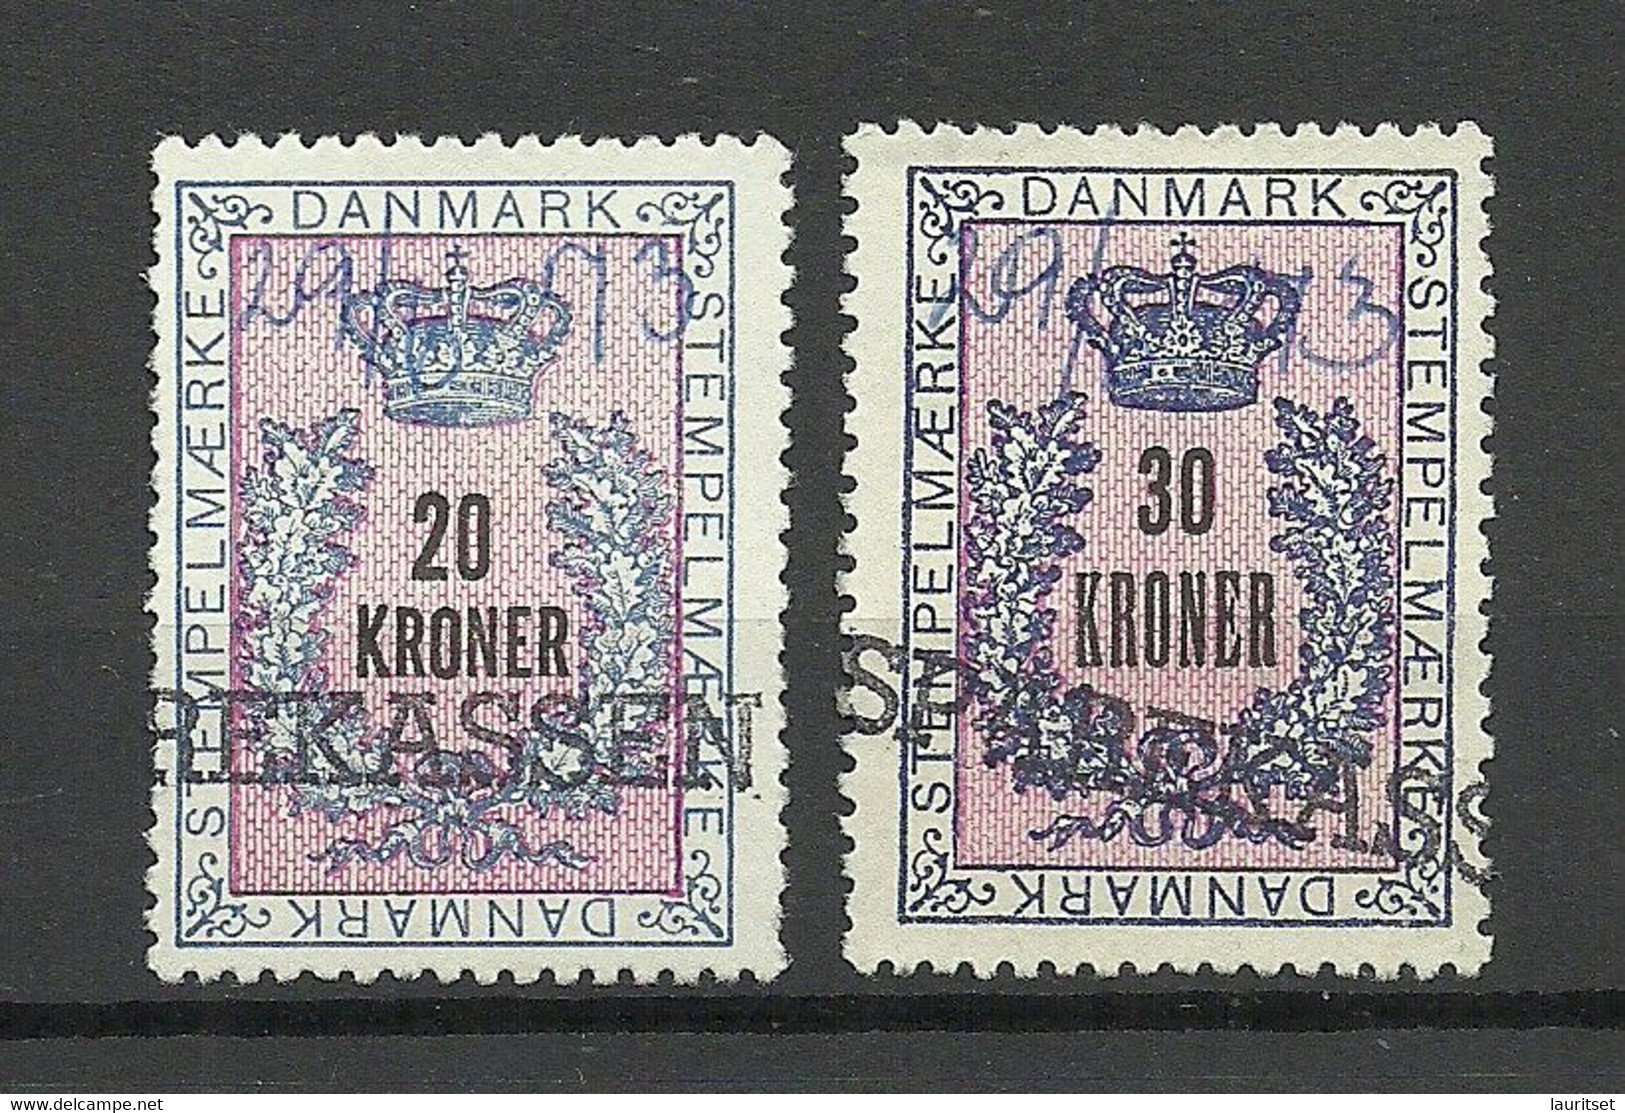 DENMARK Dänemark O 1973 Sparekassen Tax Stempelmarken Documentary Taxe Revenue Samps - Revenue Stamps